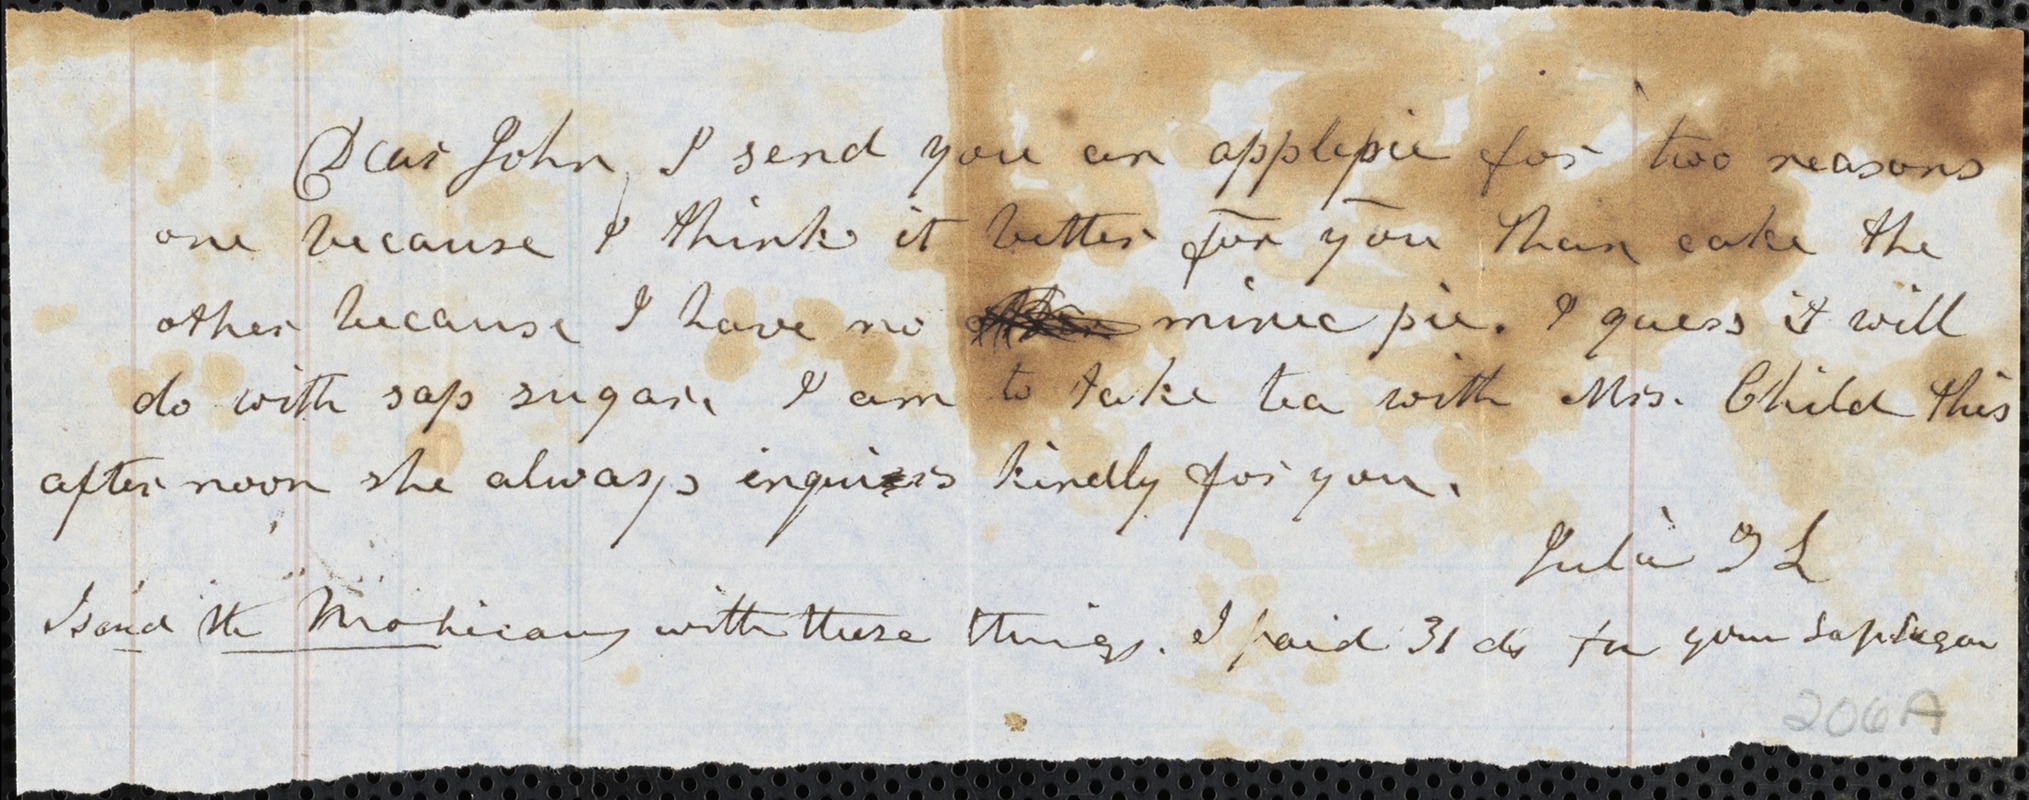 Correspondence from Julia Temple Davis Long and Zadoc Long to John D. Long, April 16-17, 1854